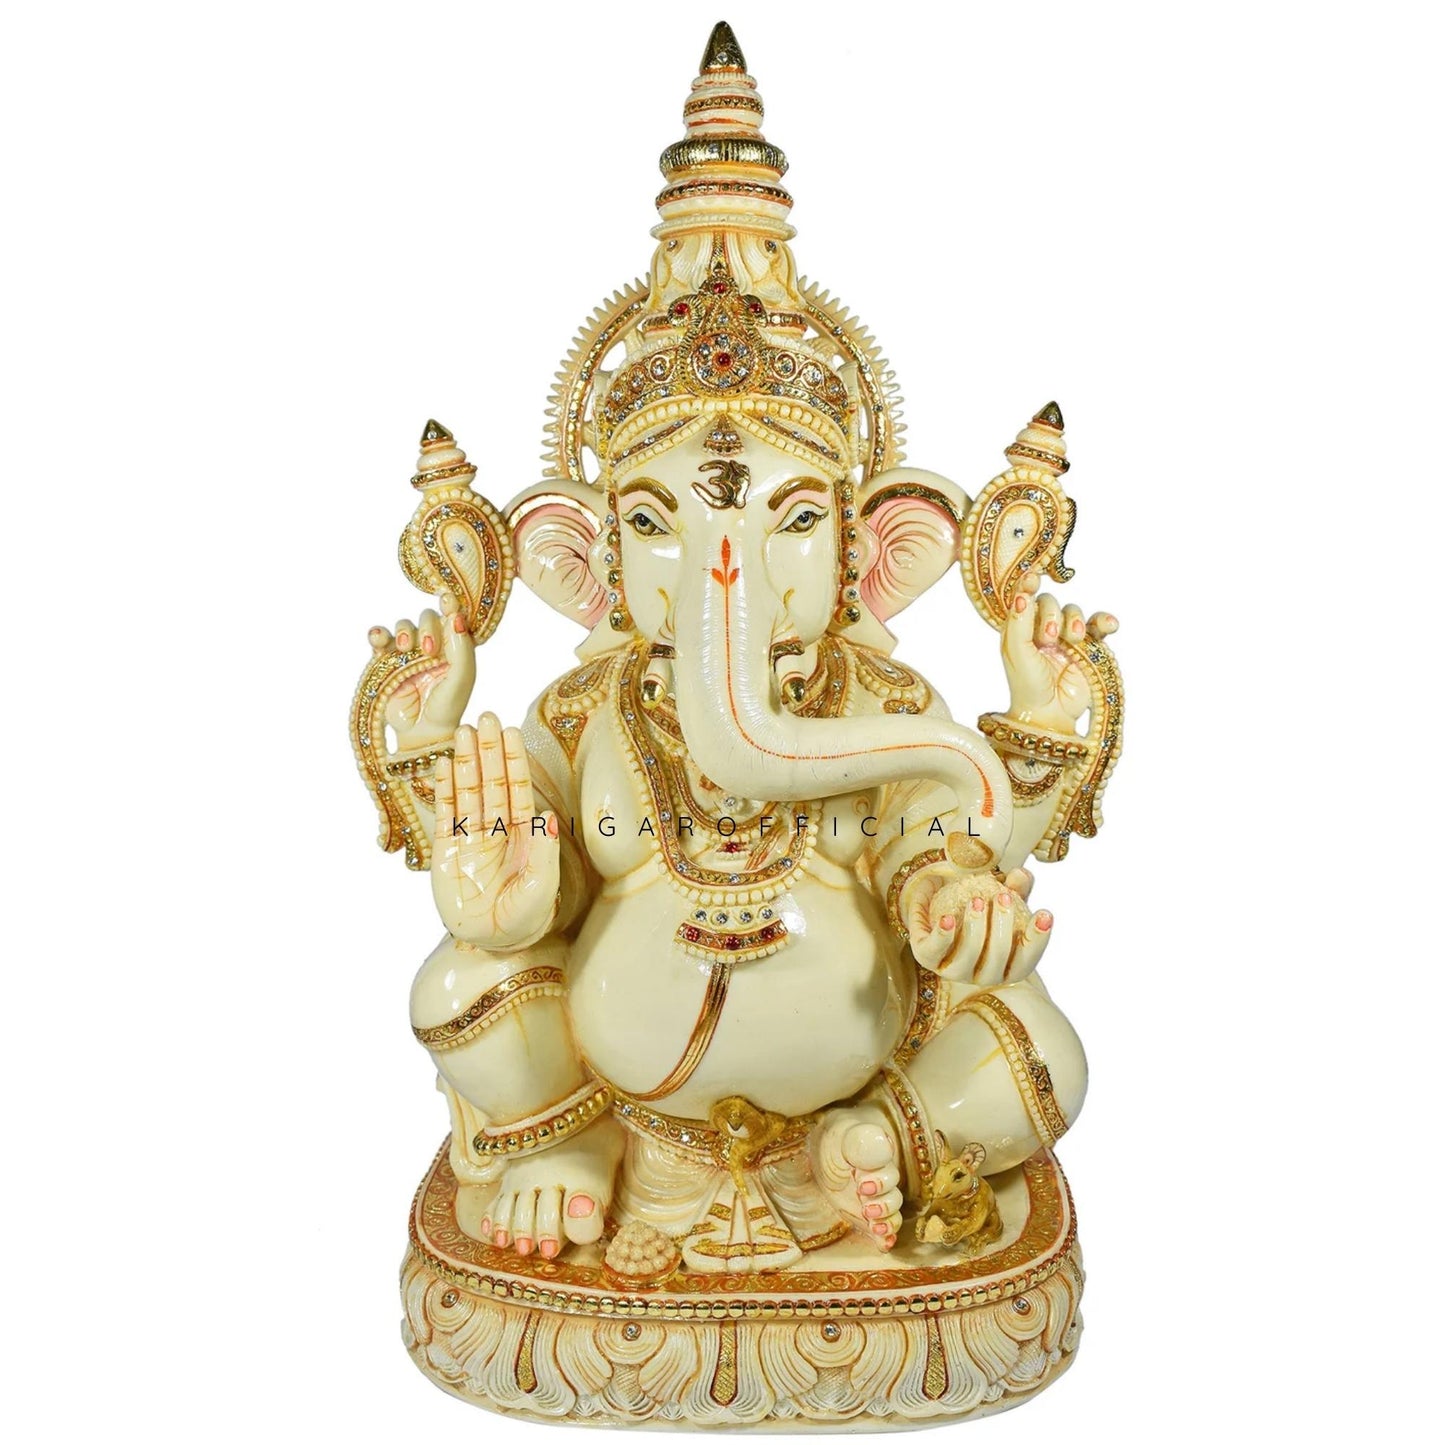 Ganesha Statue Murti, Large 21 inches Yellow Golden Ganpati, Hindu Religious Prosperity God, Good Luck Elephant, Marble Ganapati Idol, Vinayak Deity Home Temple Sculpture, Office Housewarming Gifts